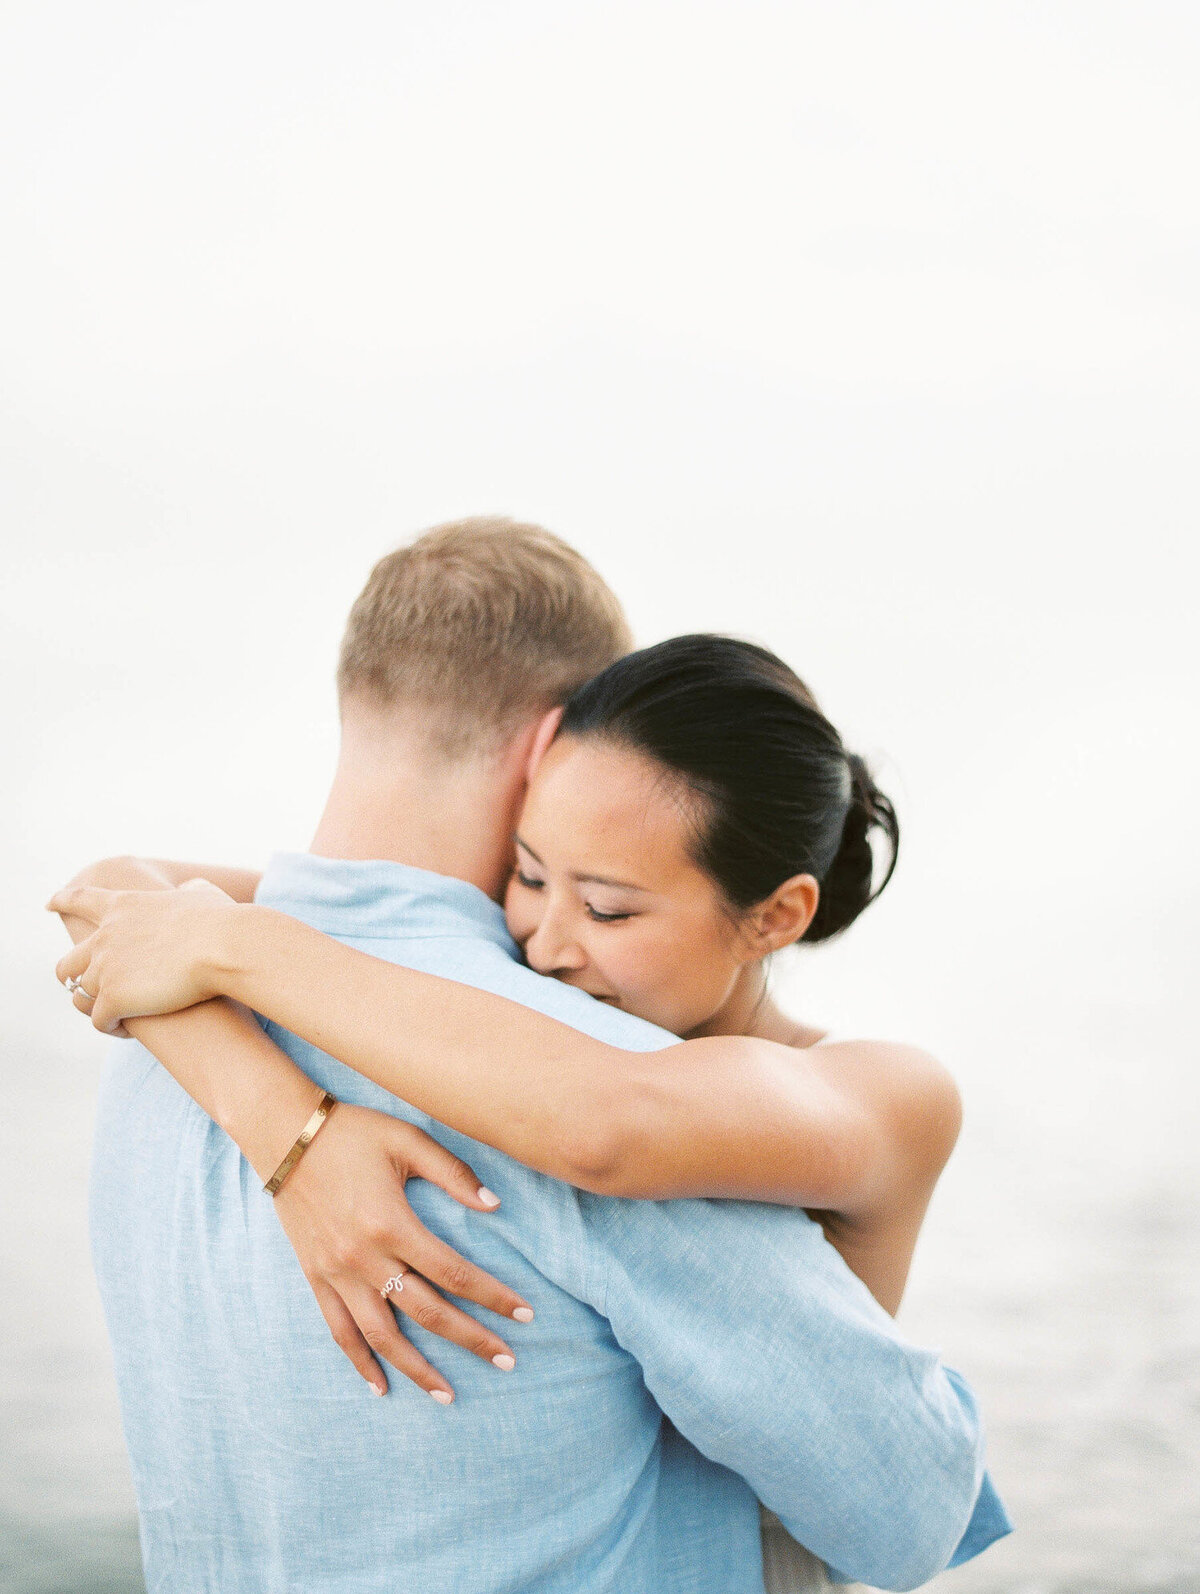 [Engaged]Rachel+Will | Hawaii Wedding & Lifestyle Photography | Ashley Goodwin Photography